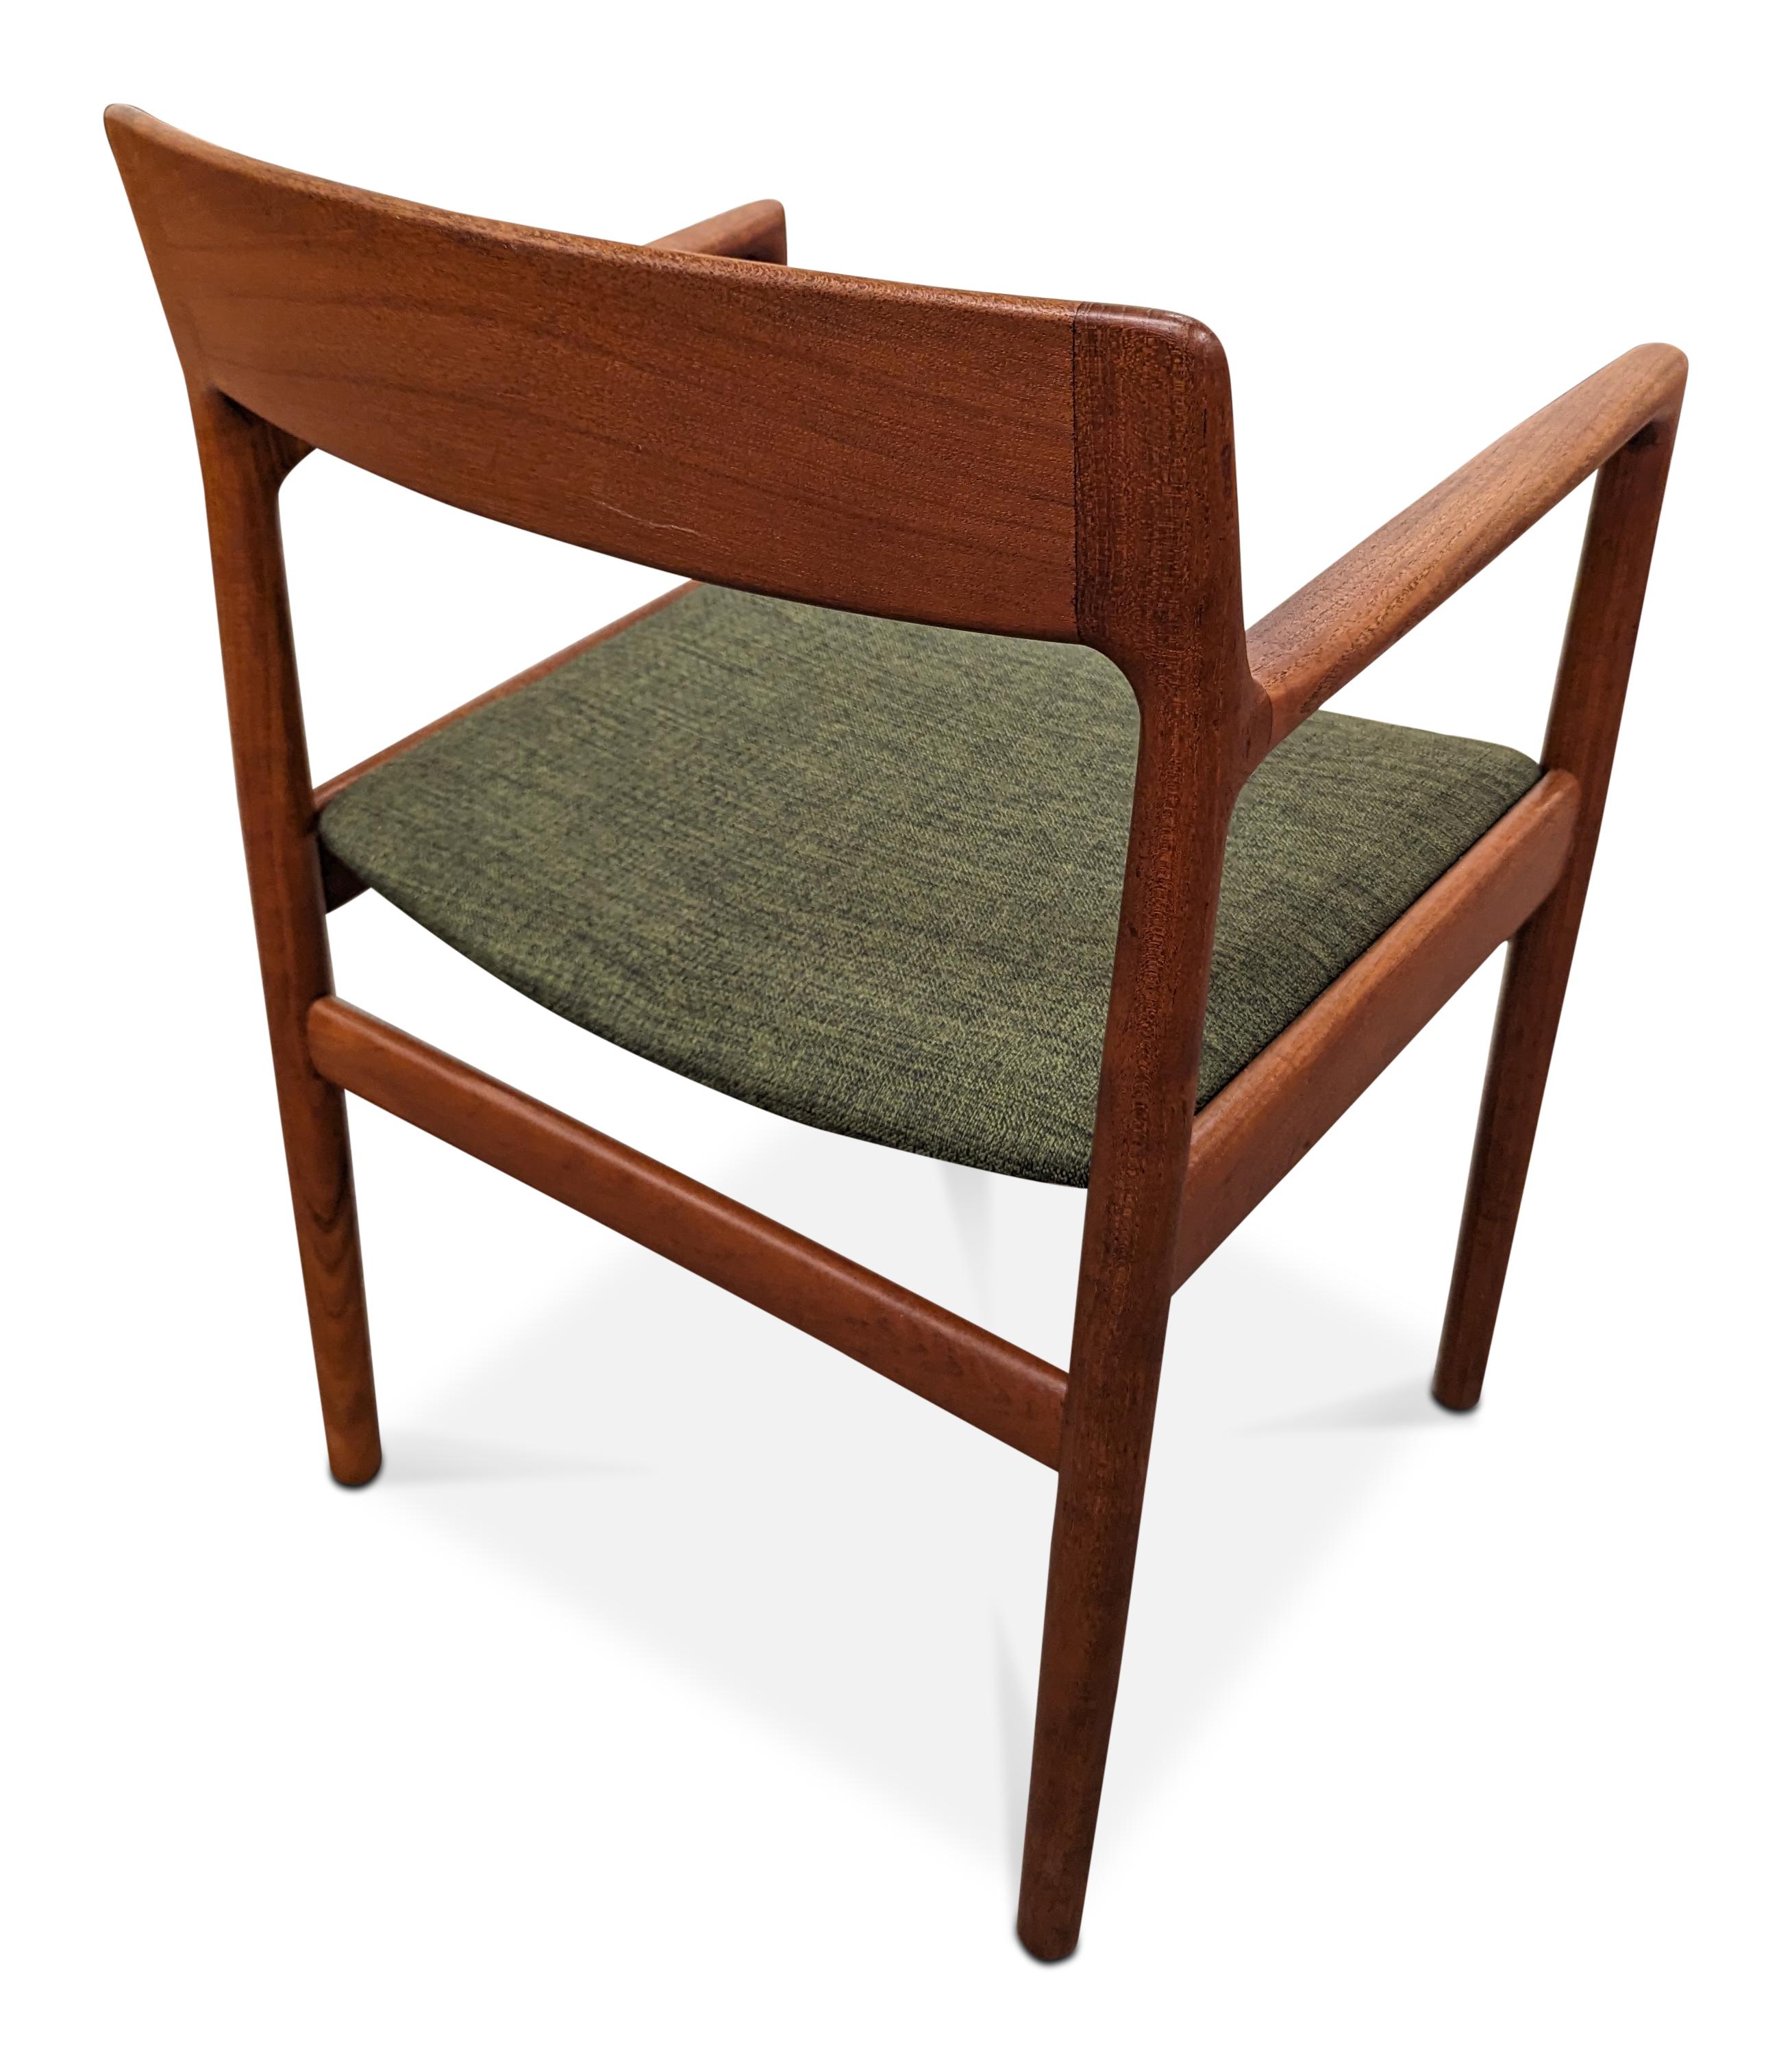 Mid-20th Century Norregard Moeblefabrik Teak Desk Chairs - 022484 Vintage Danish Mid Century  For Sale